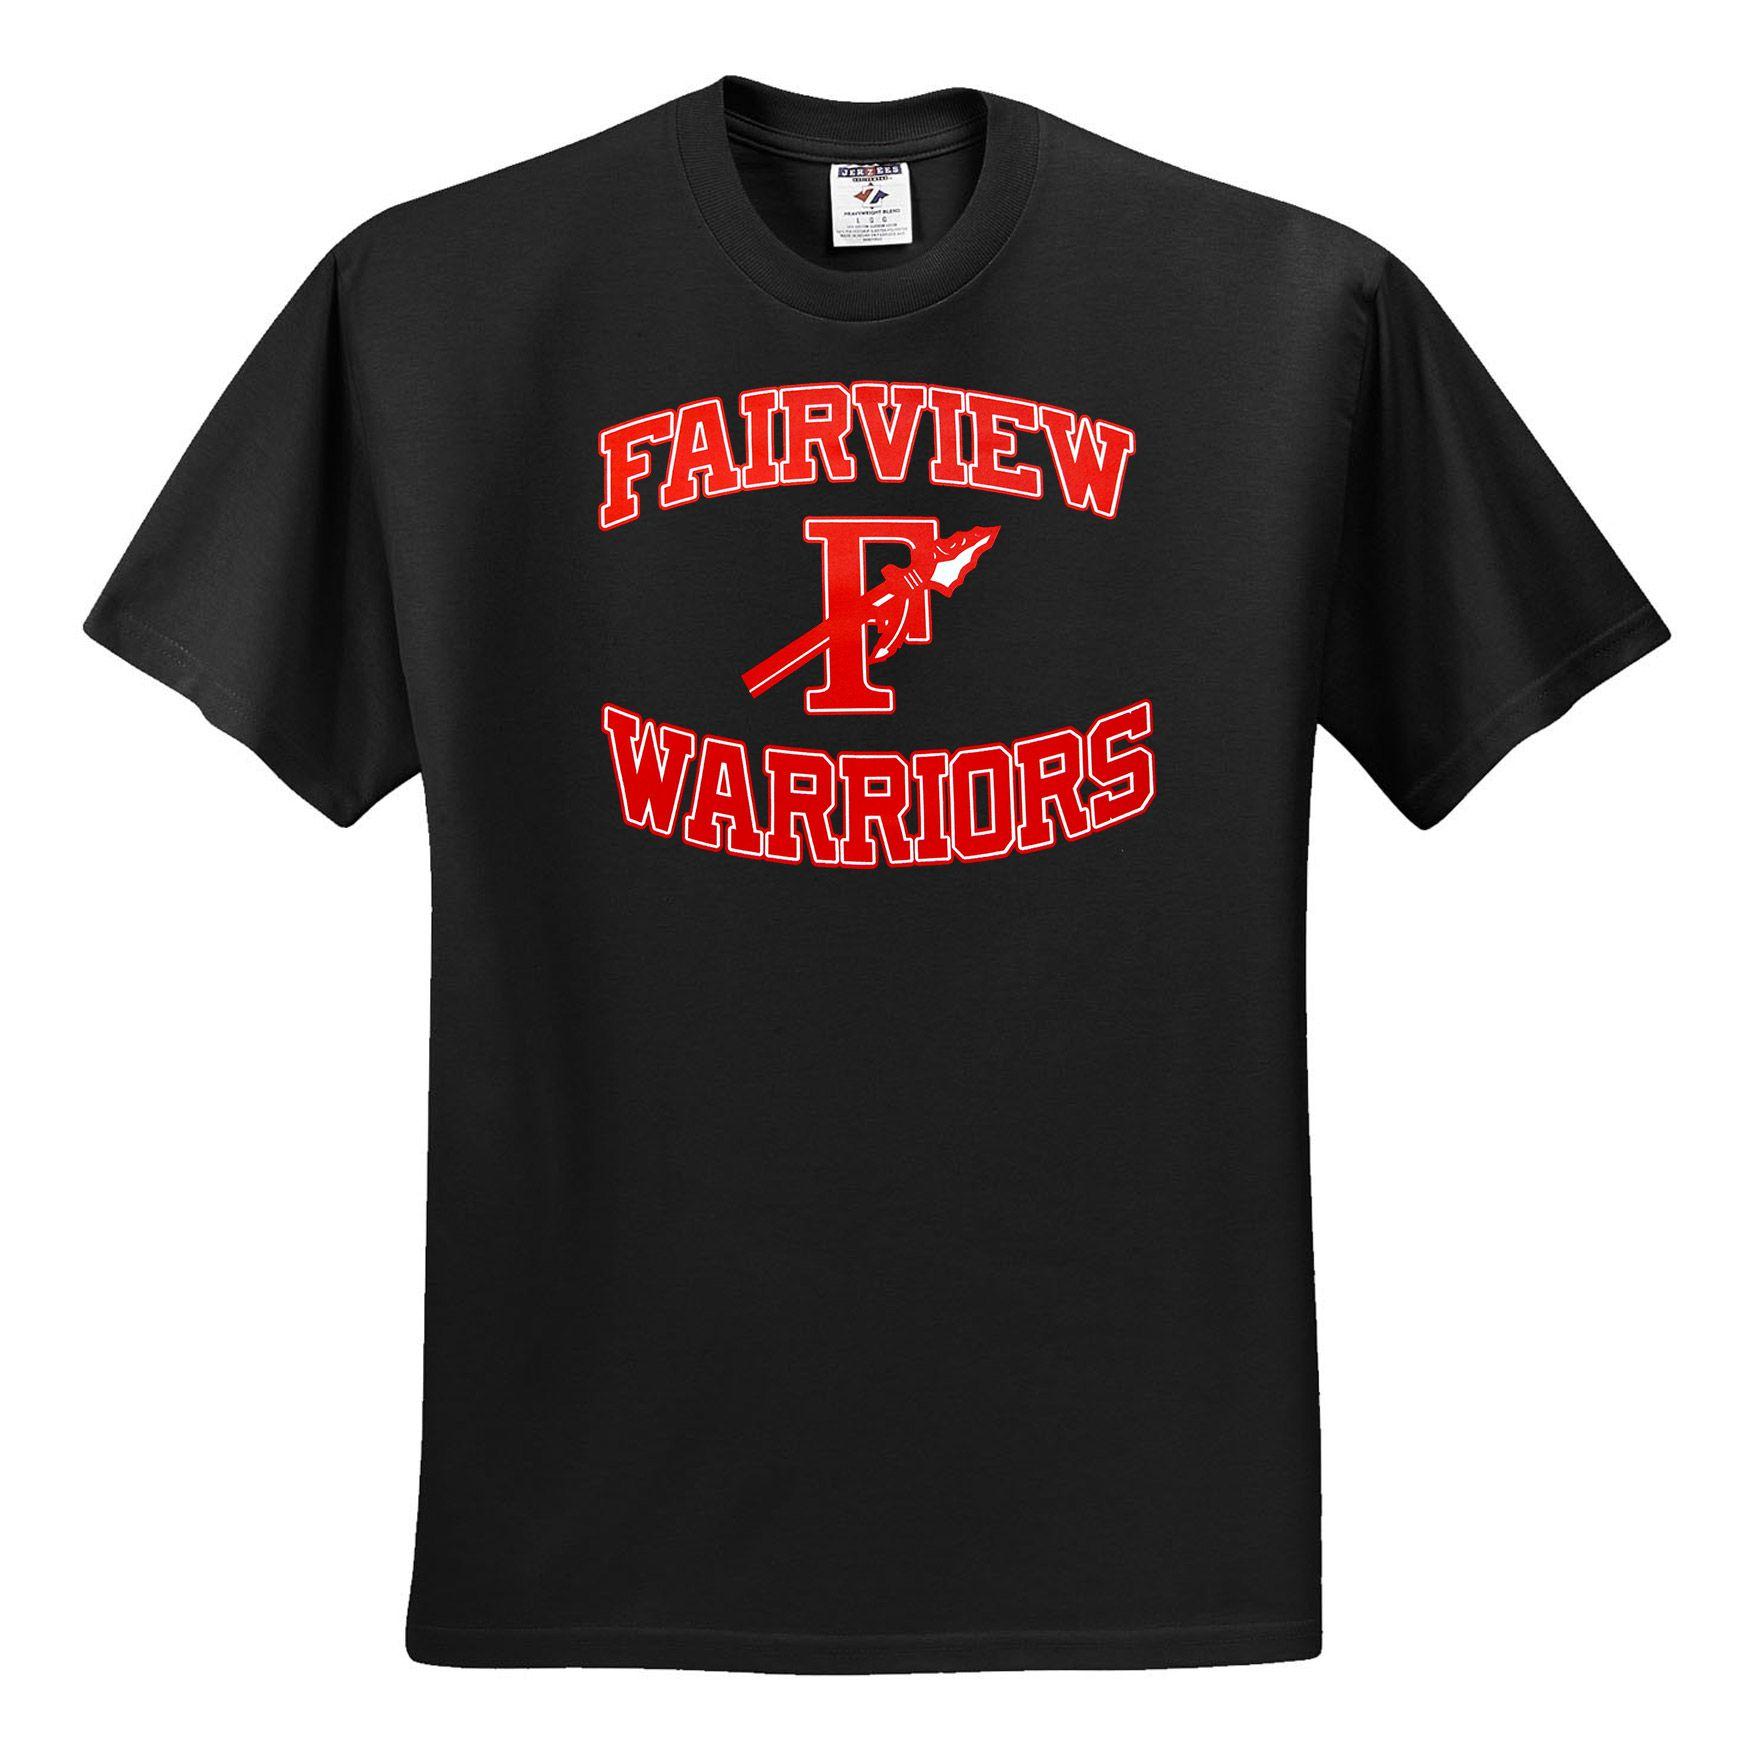 Black and Red Spear Logo - Fairview Park Spear Short Sleeve T Shirt